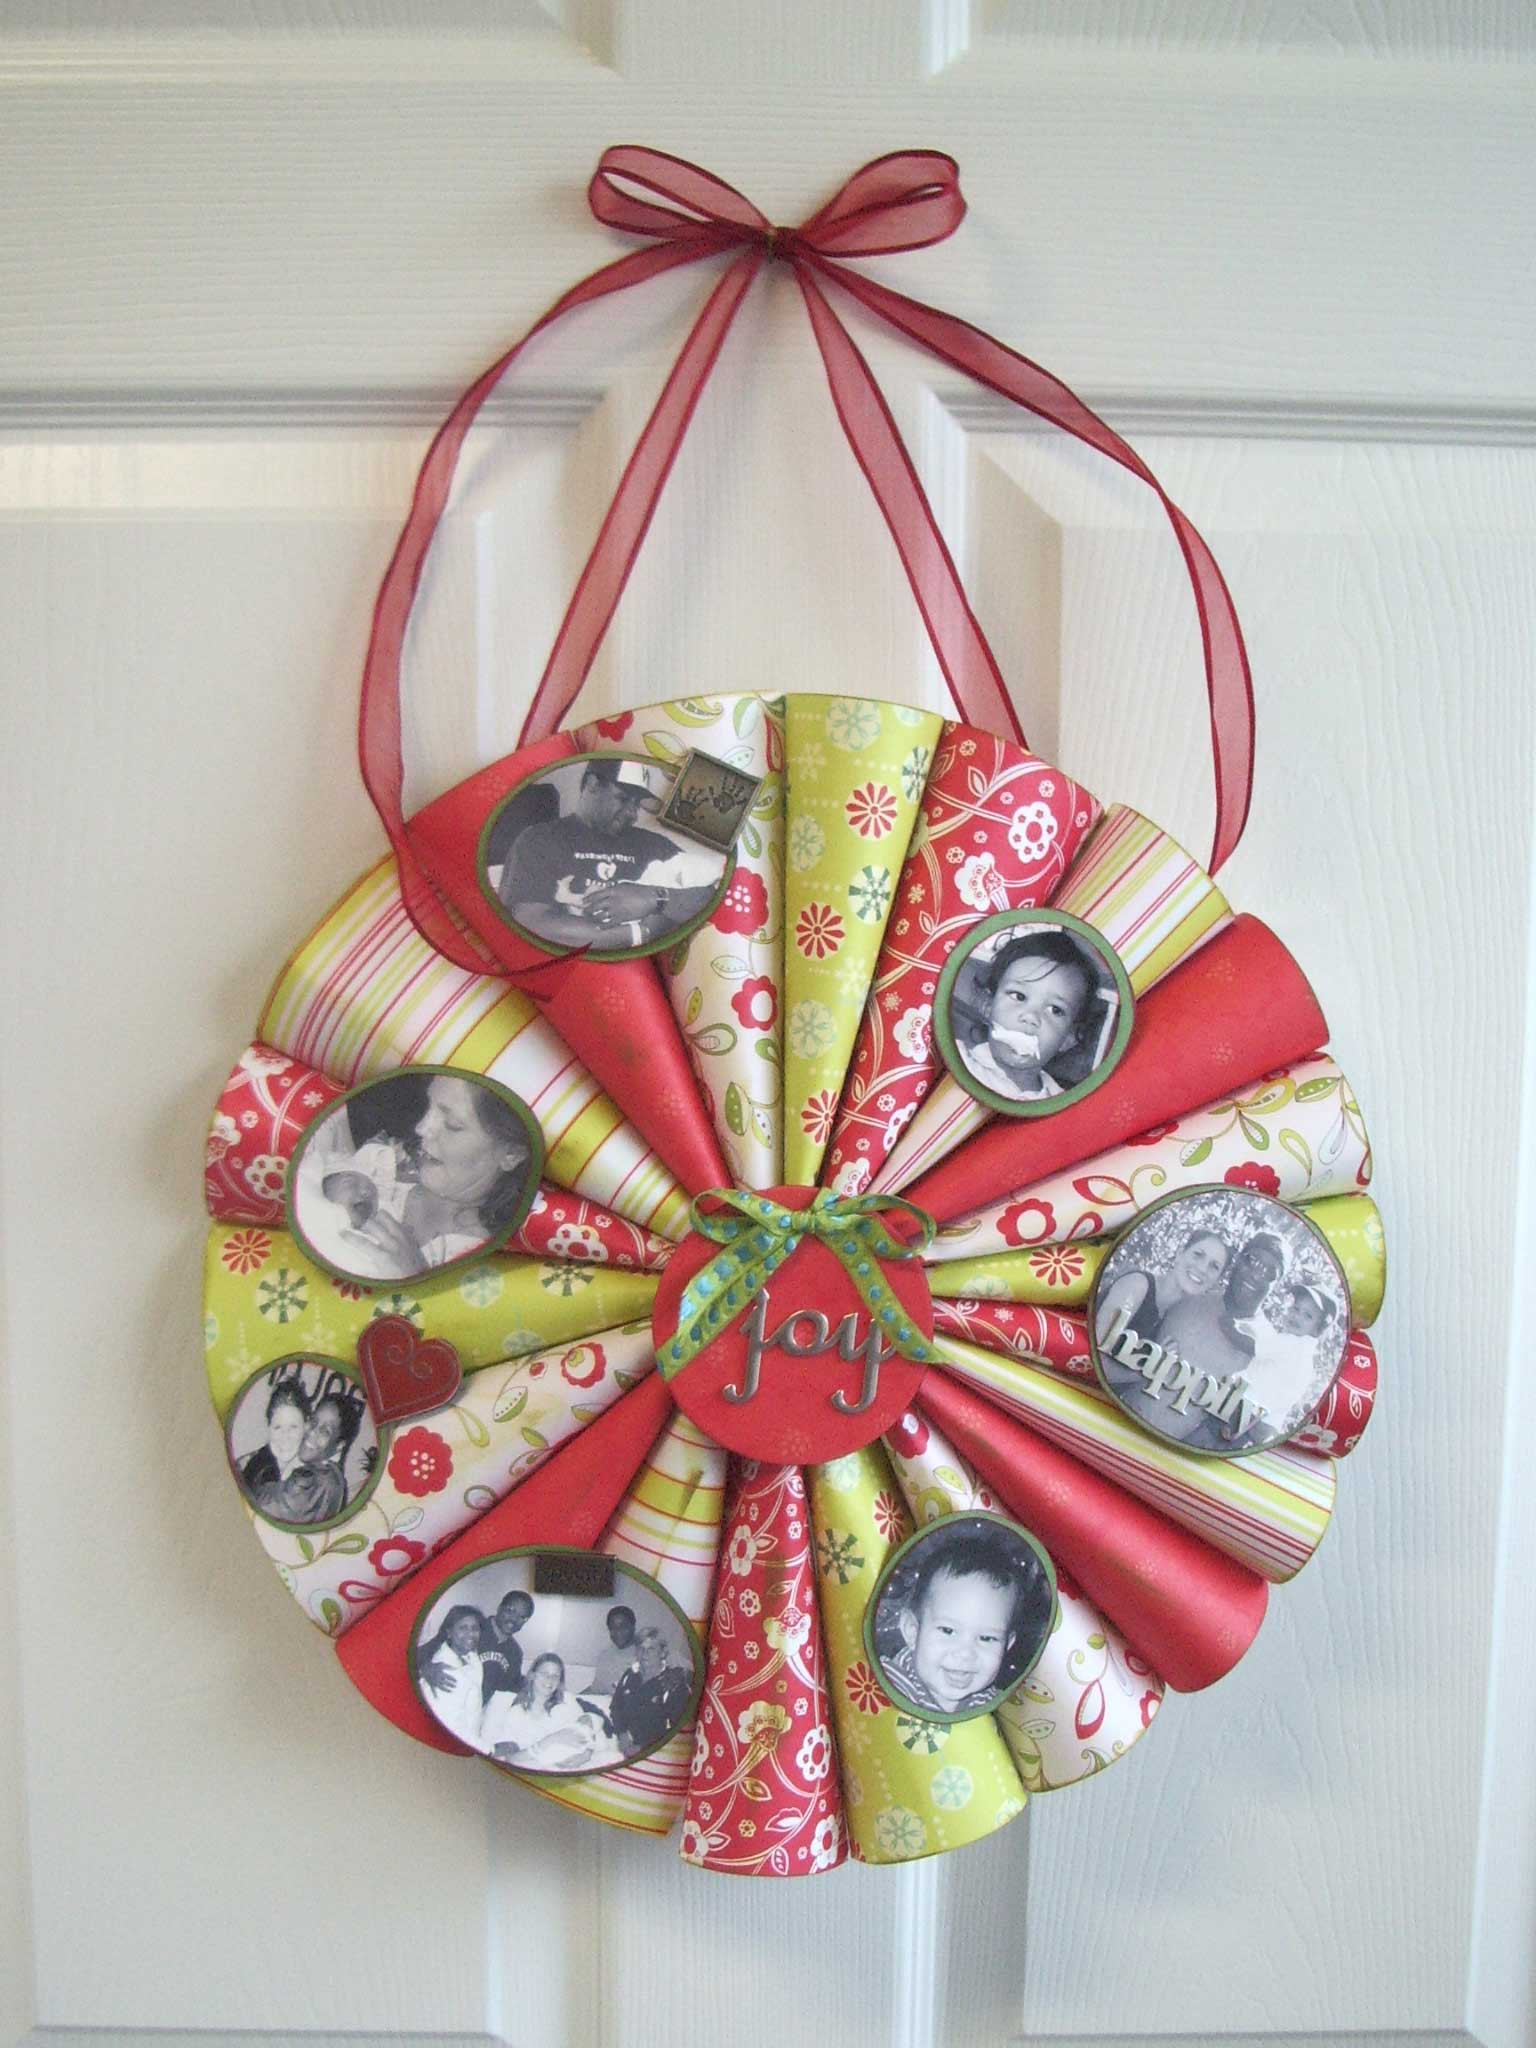 Craft To Make For Christmas
 Creative Christmas Crafts To Make At Home – HomesFeed